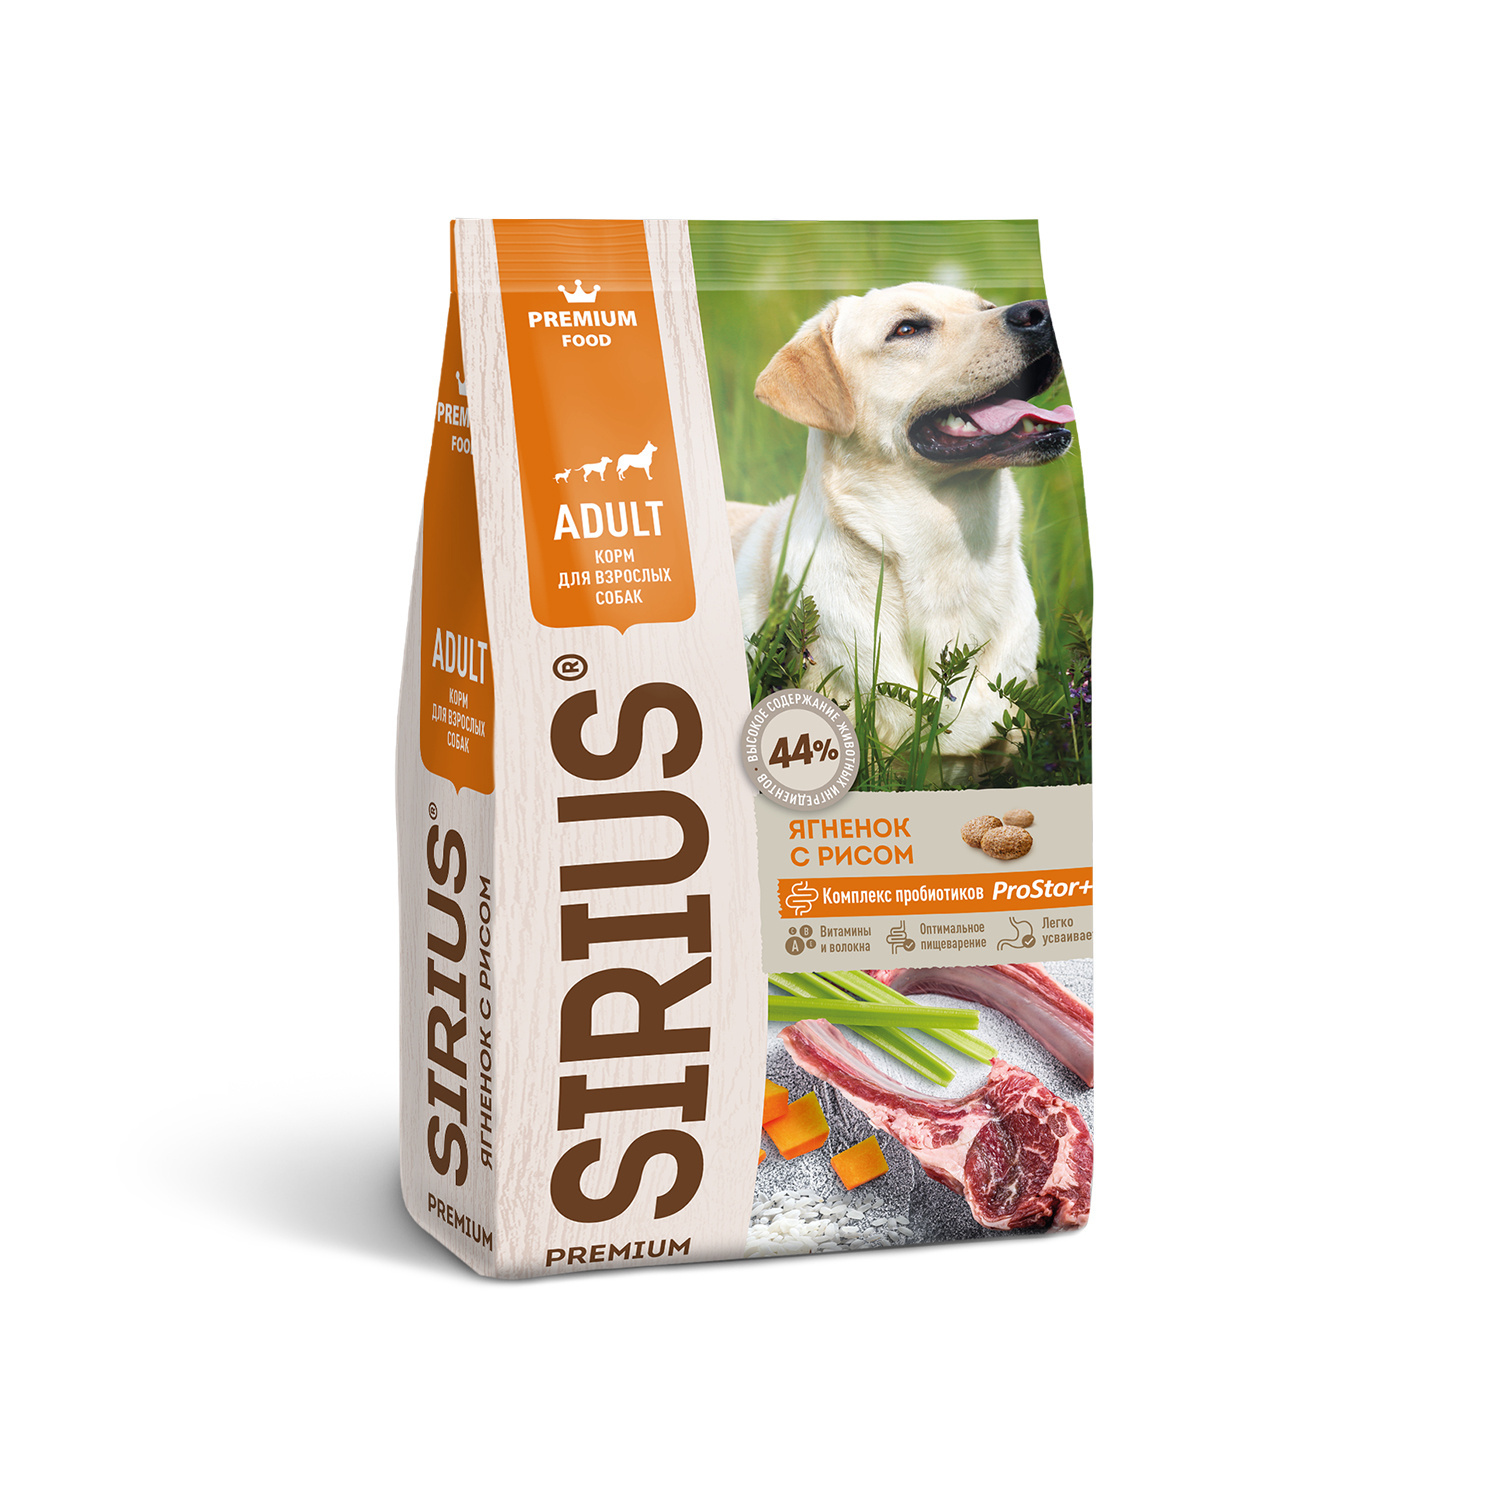 Sirius Sirius сухой корм для собак, ягненок и рис (2 кг) sirius sirius сухой корм для котят с мясом индейки 1 5 кг